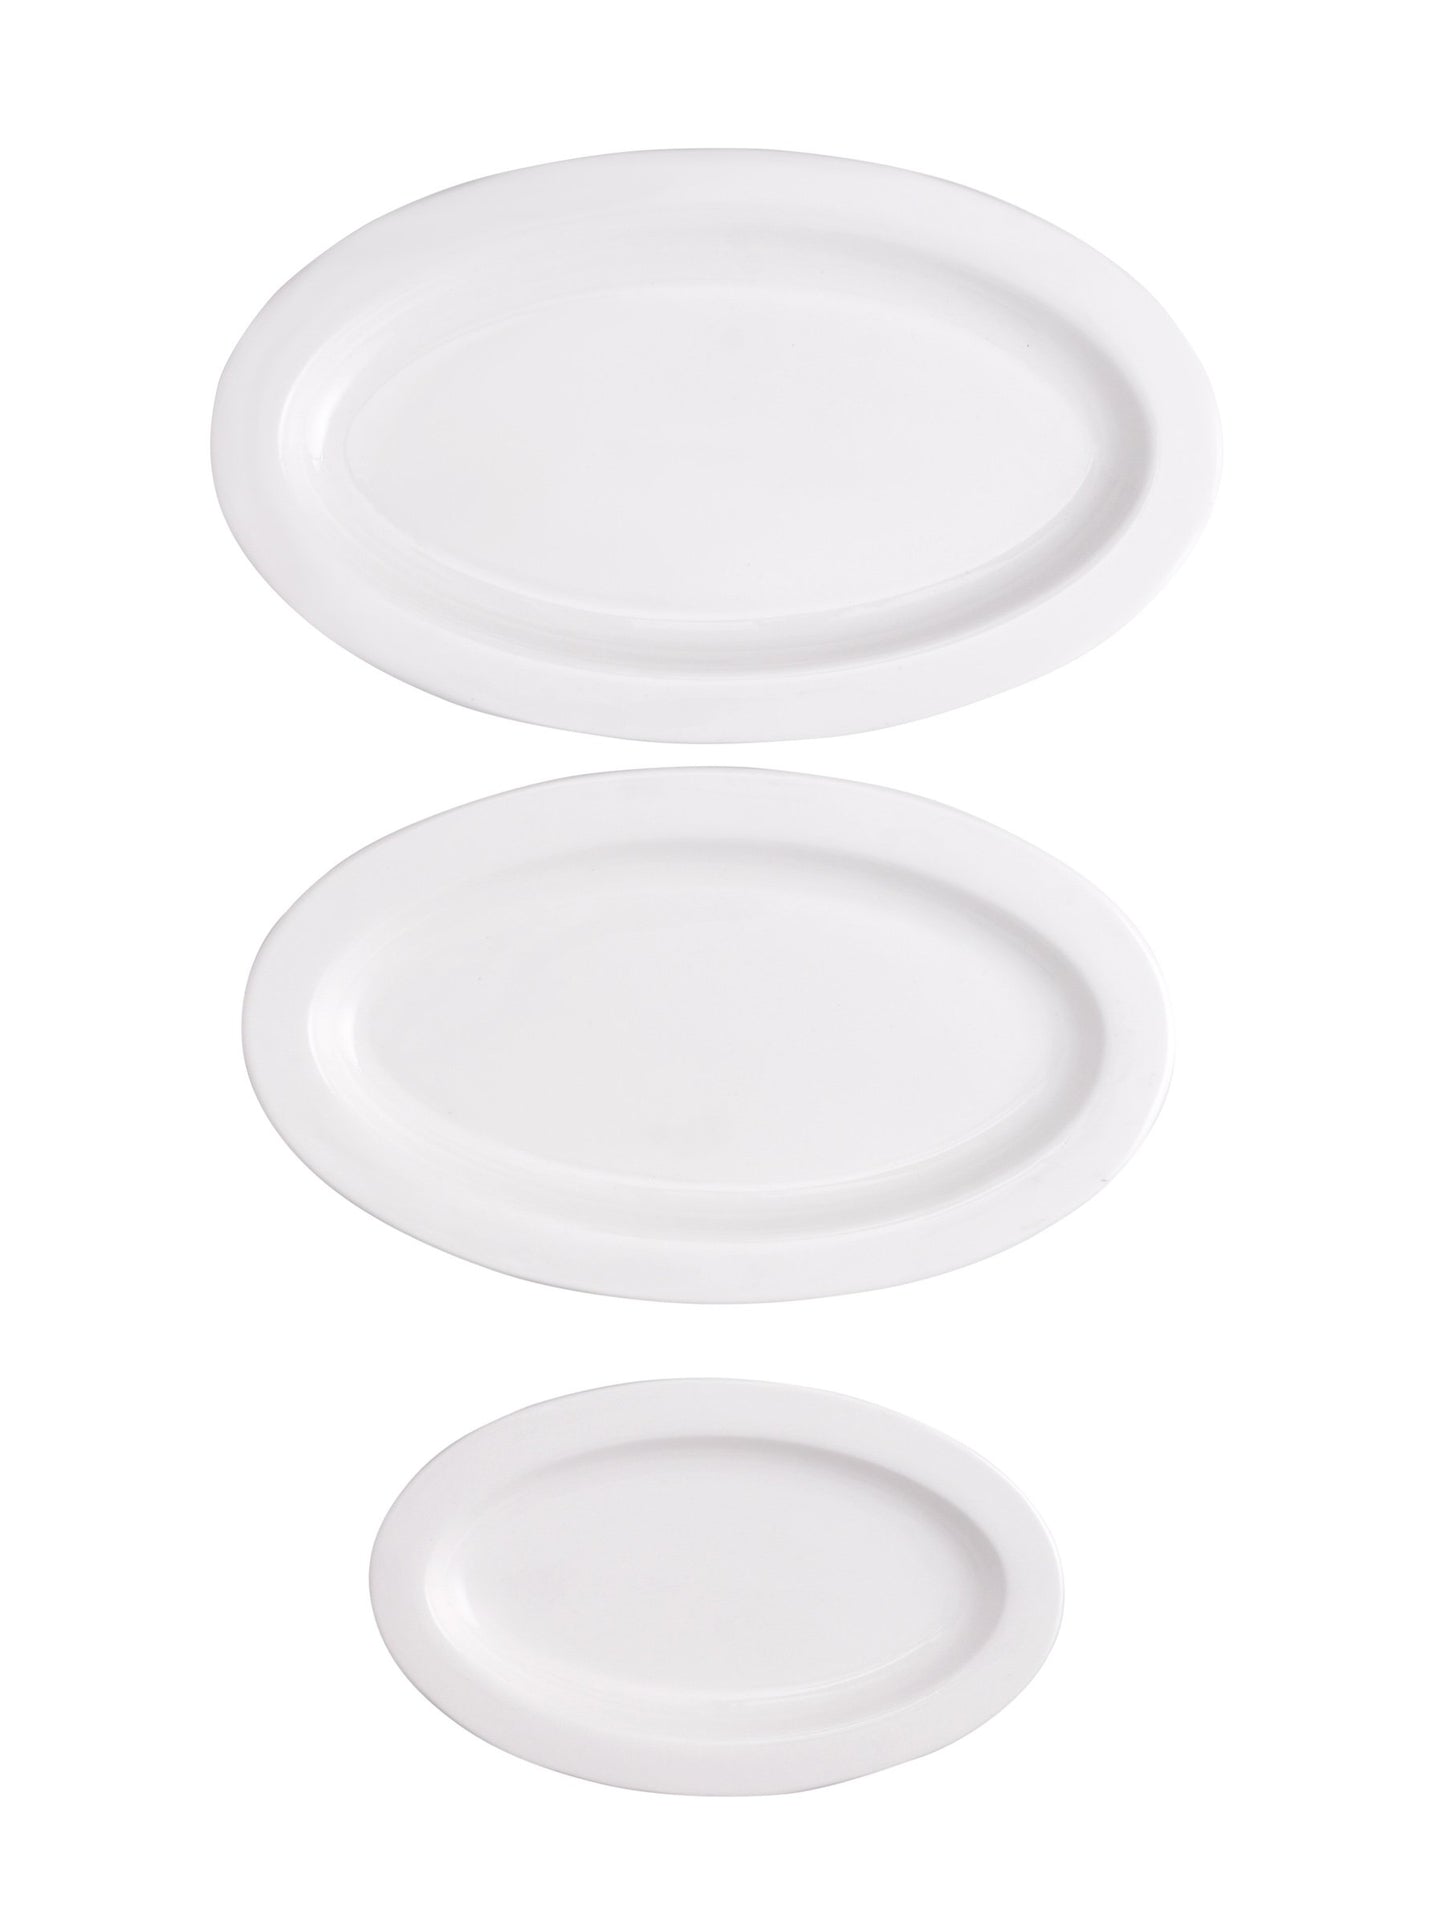 Clay Craft Basic Platter Oval Small, Medium & Big 3 Piece Plain White - Clay Craft India